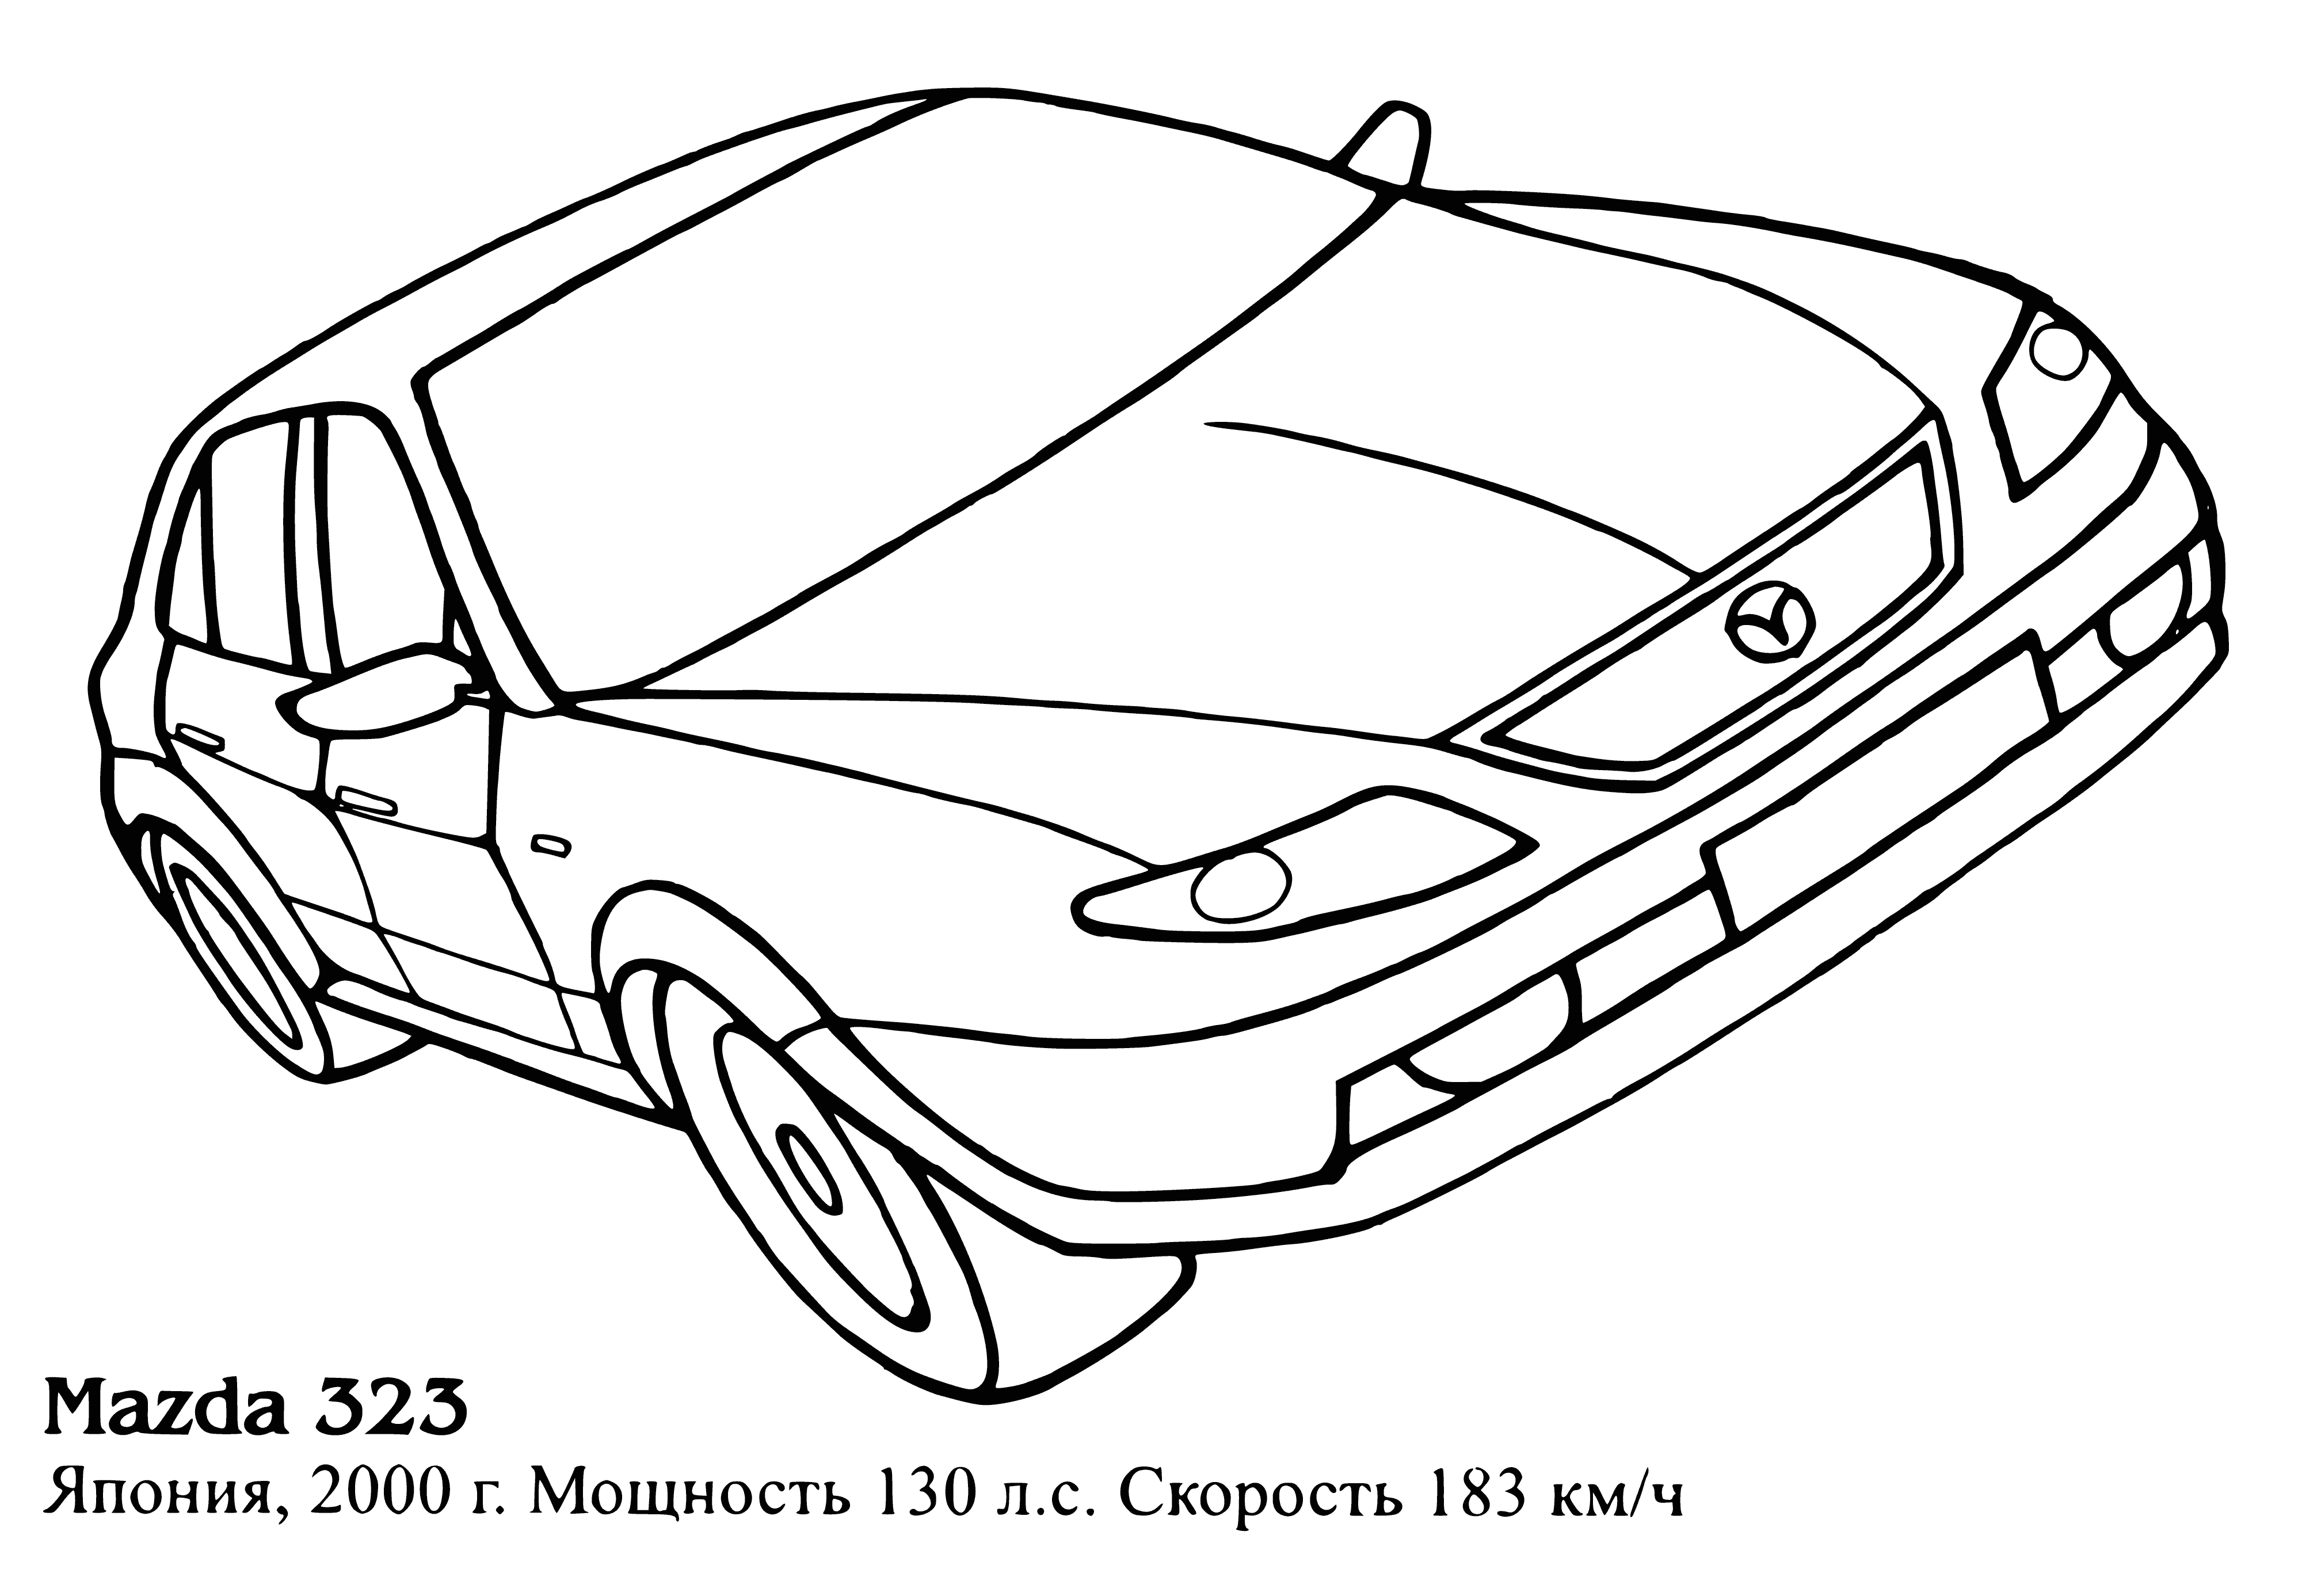 Mazda 323 coloring page